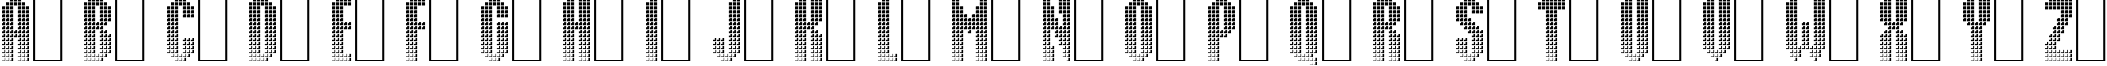 Пример написания английского алфавита шрифтом Delusion